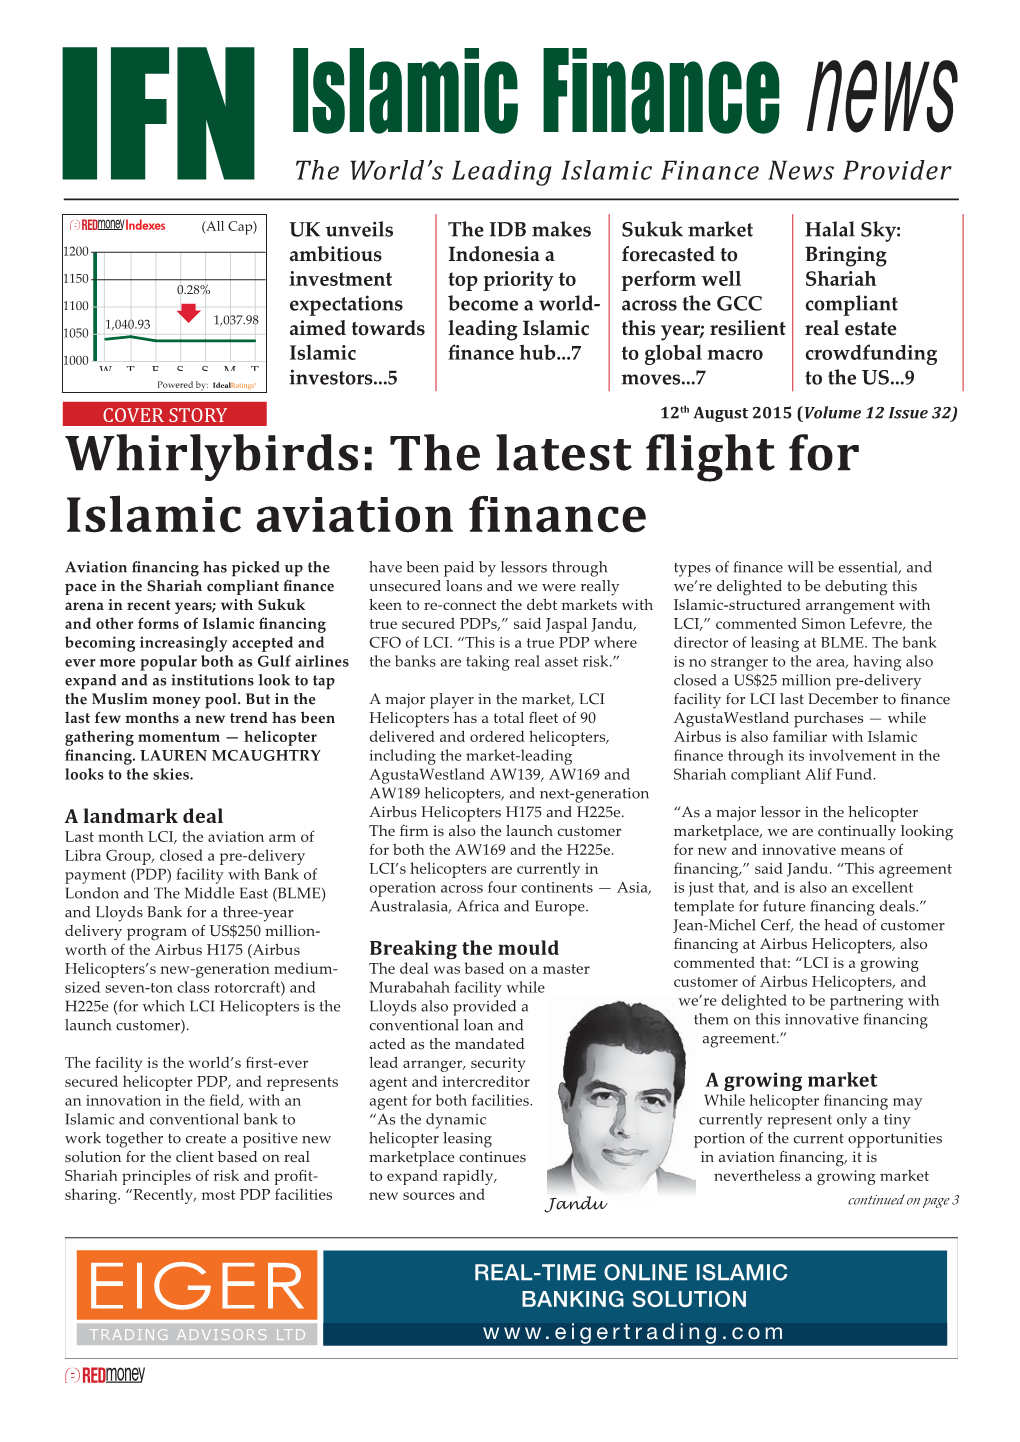 Whirlybirds: the Latest Flight for Islamic Aviation Finance